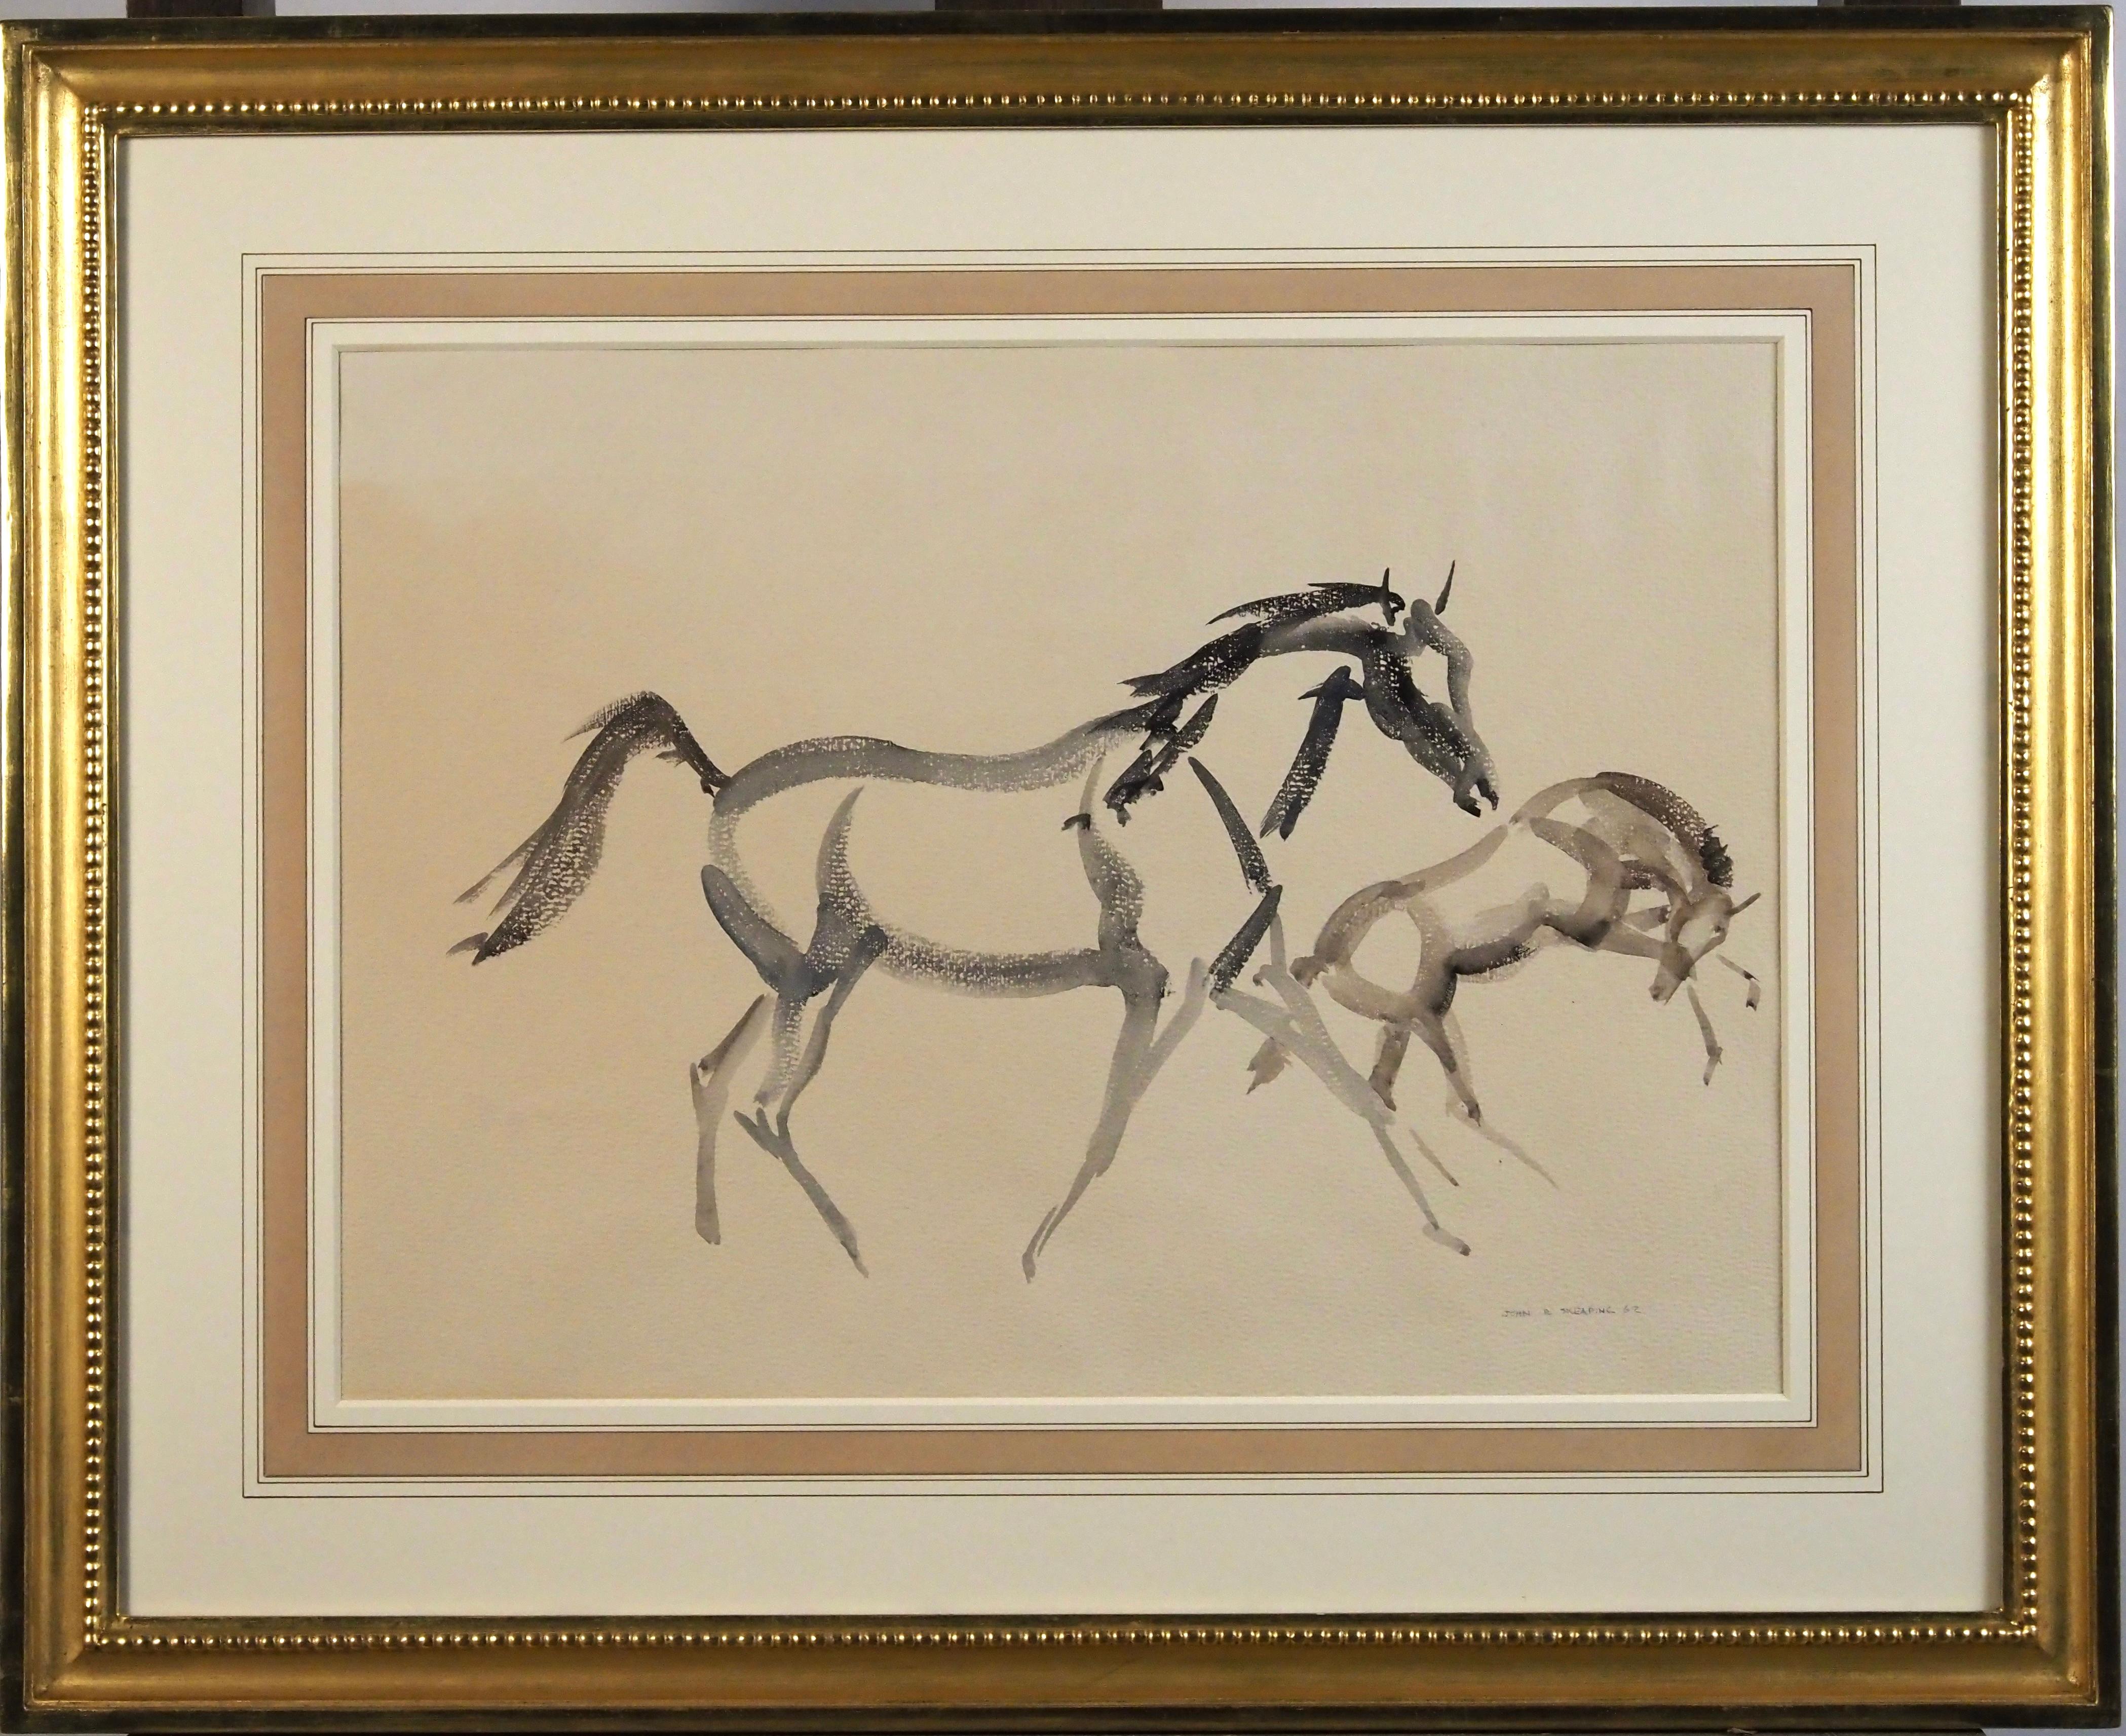 John Rattenbury Skeaping Animal Art - Horses - Mare and foal